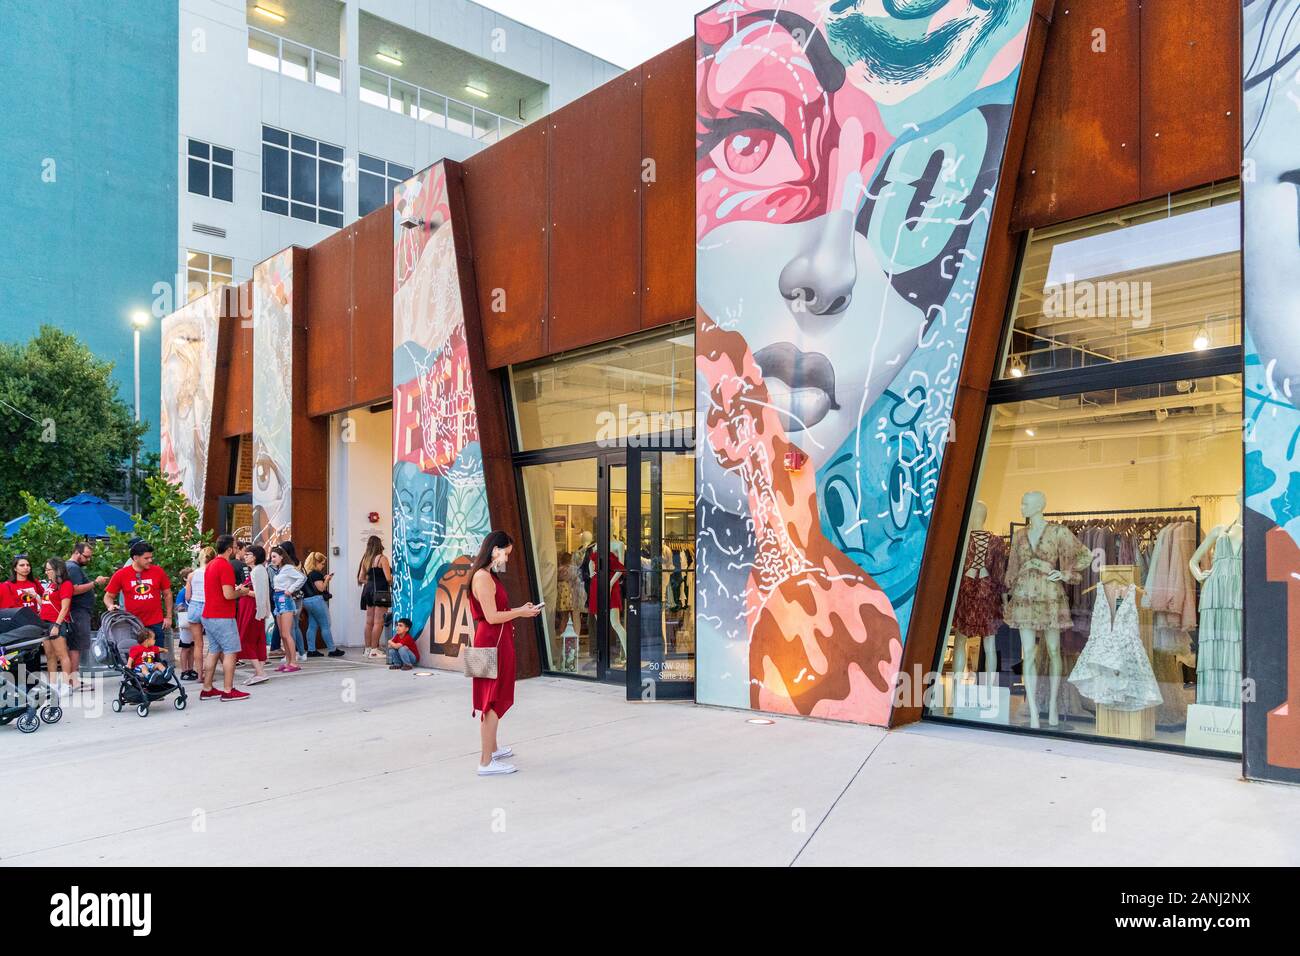 Miami, Florida - January 2, 2020: Storefronts Located in the Artistic Neighborhood of Wynwood, Miami, Florida. Stock Photo